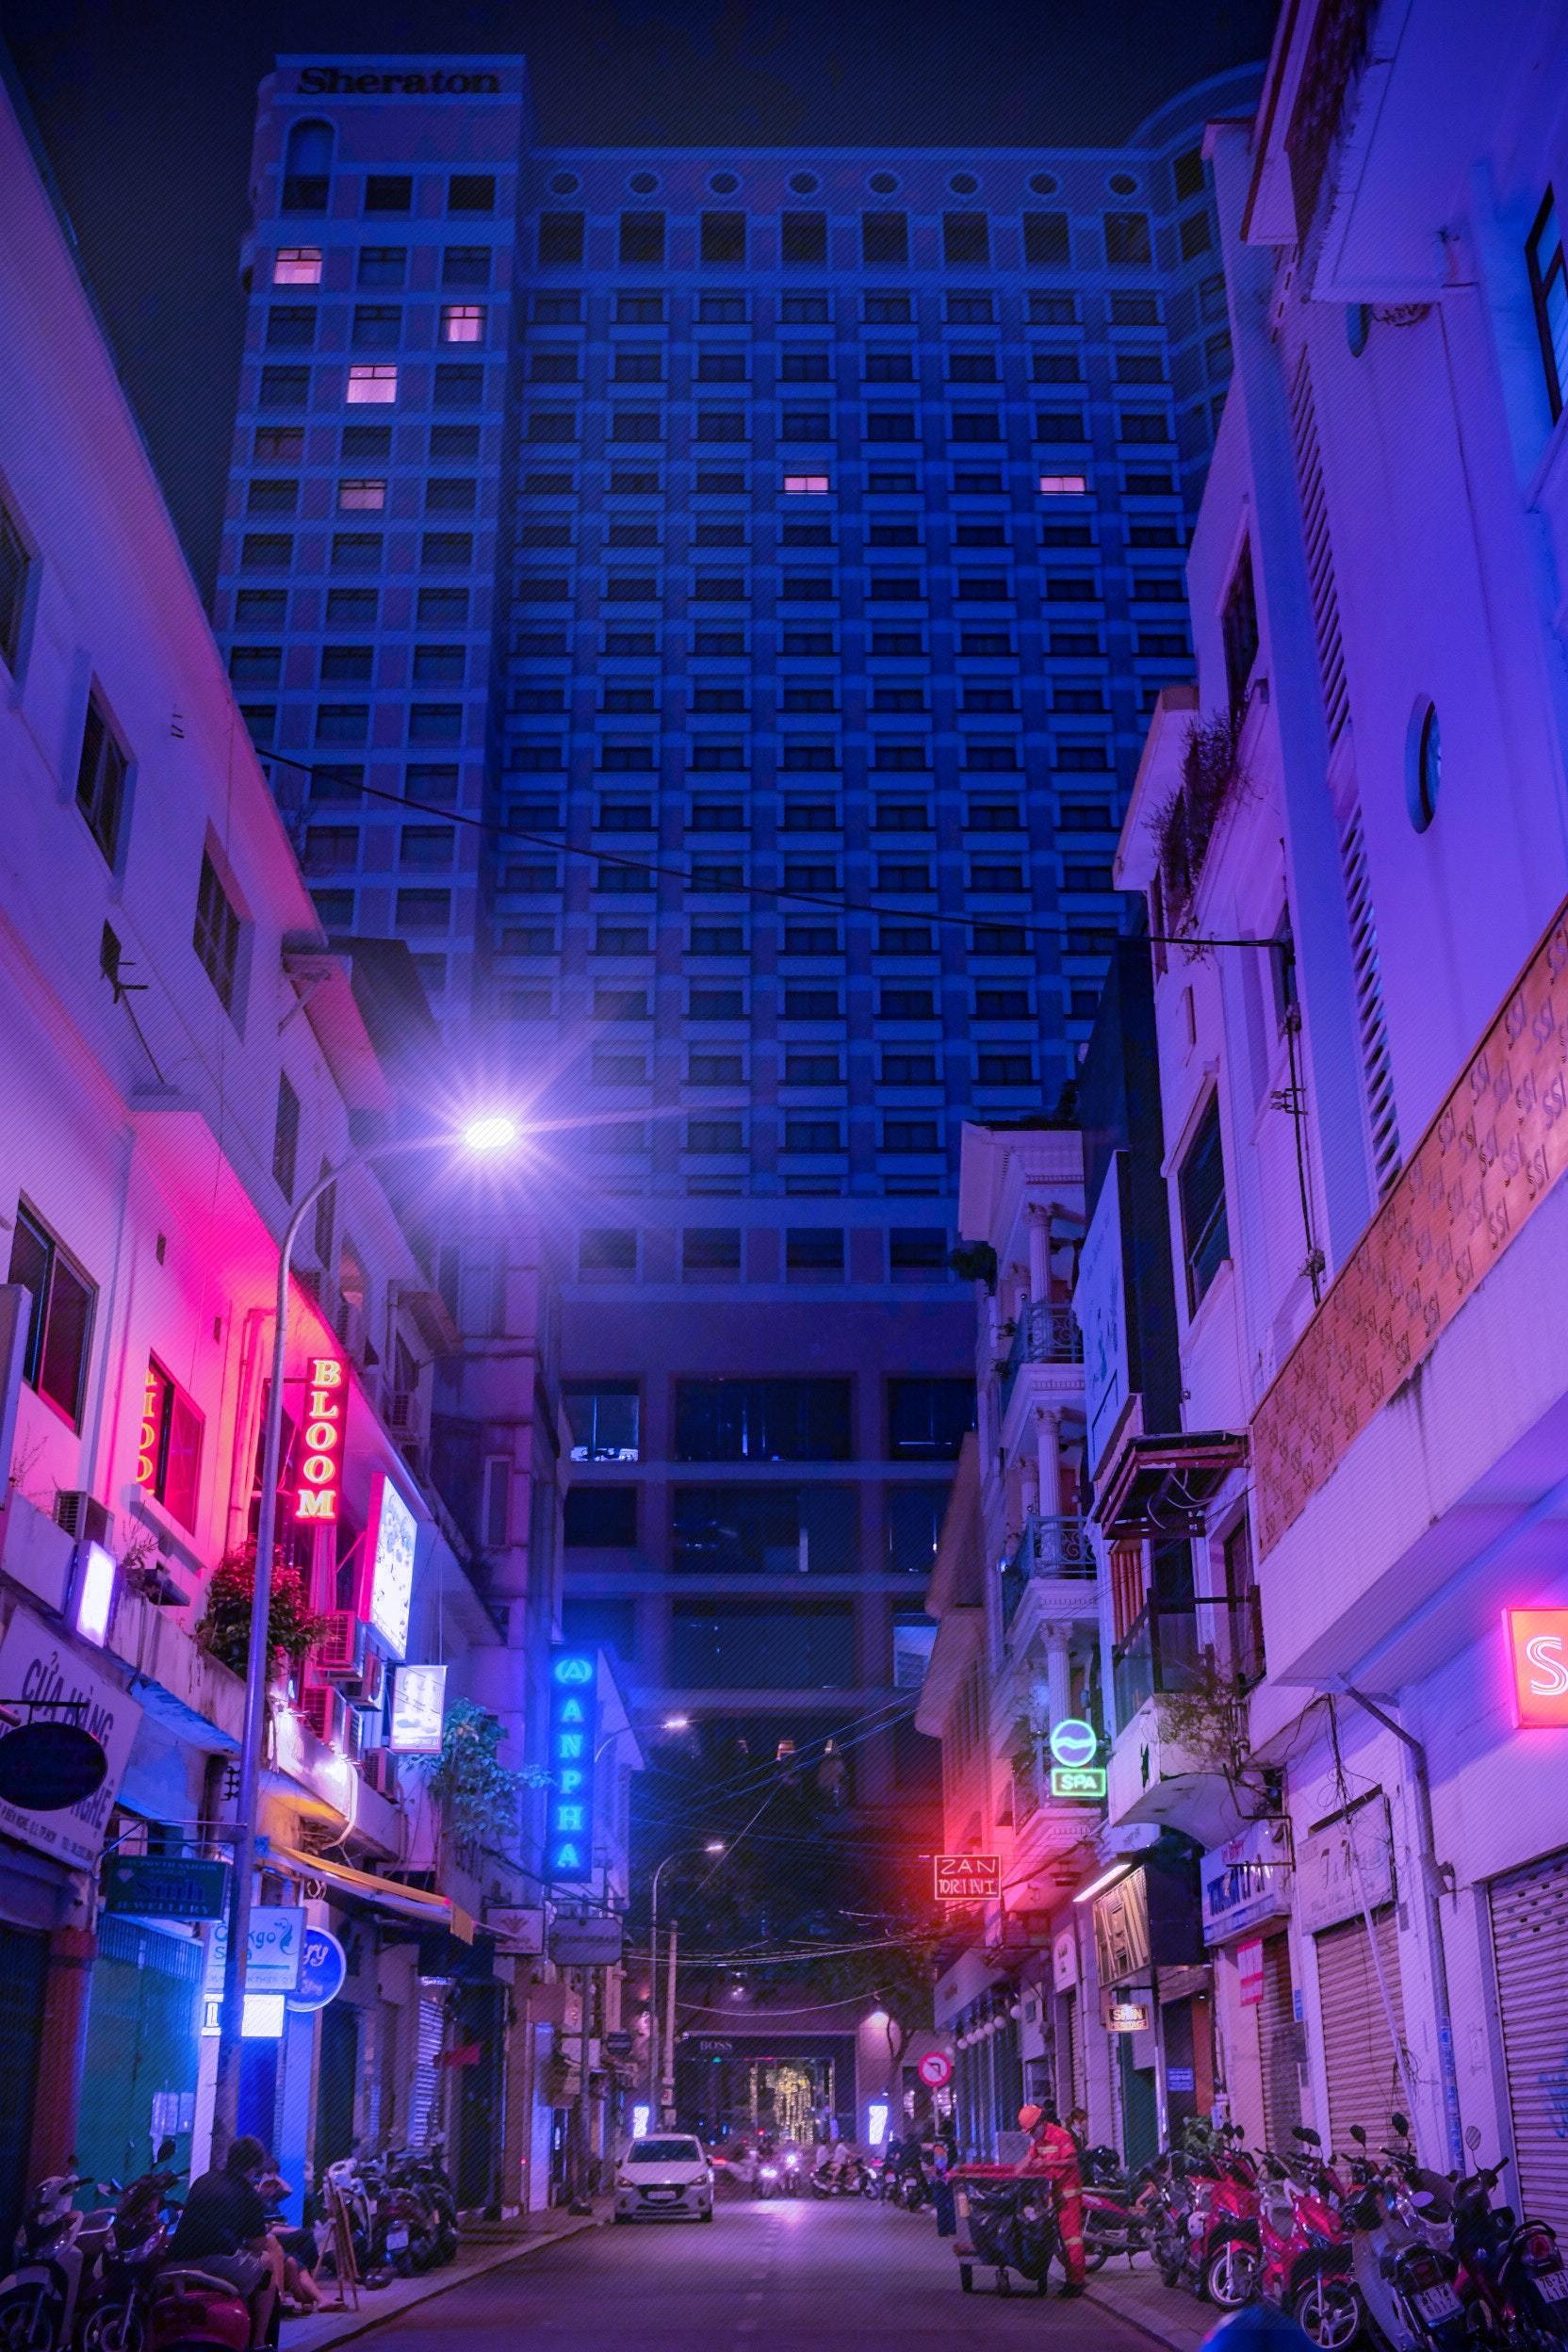 Strada trafficata della città in foto di luce blu e rosa 